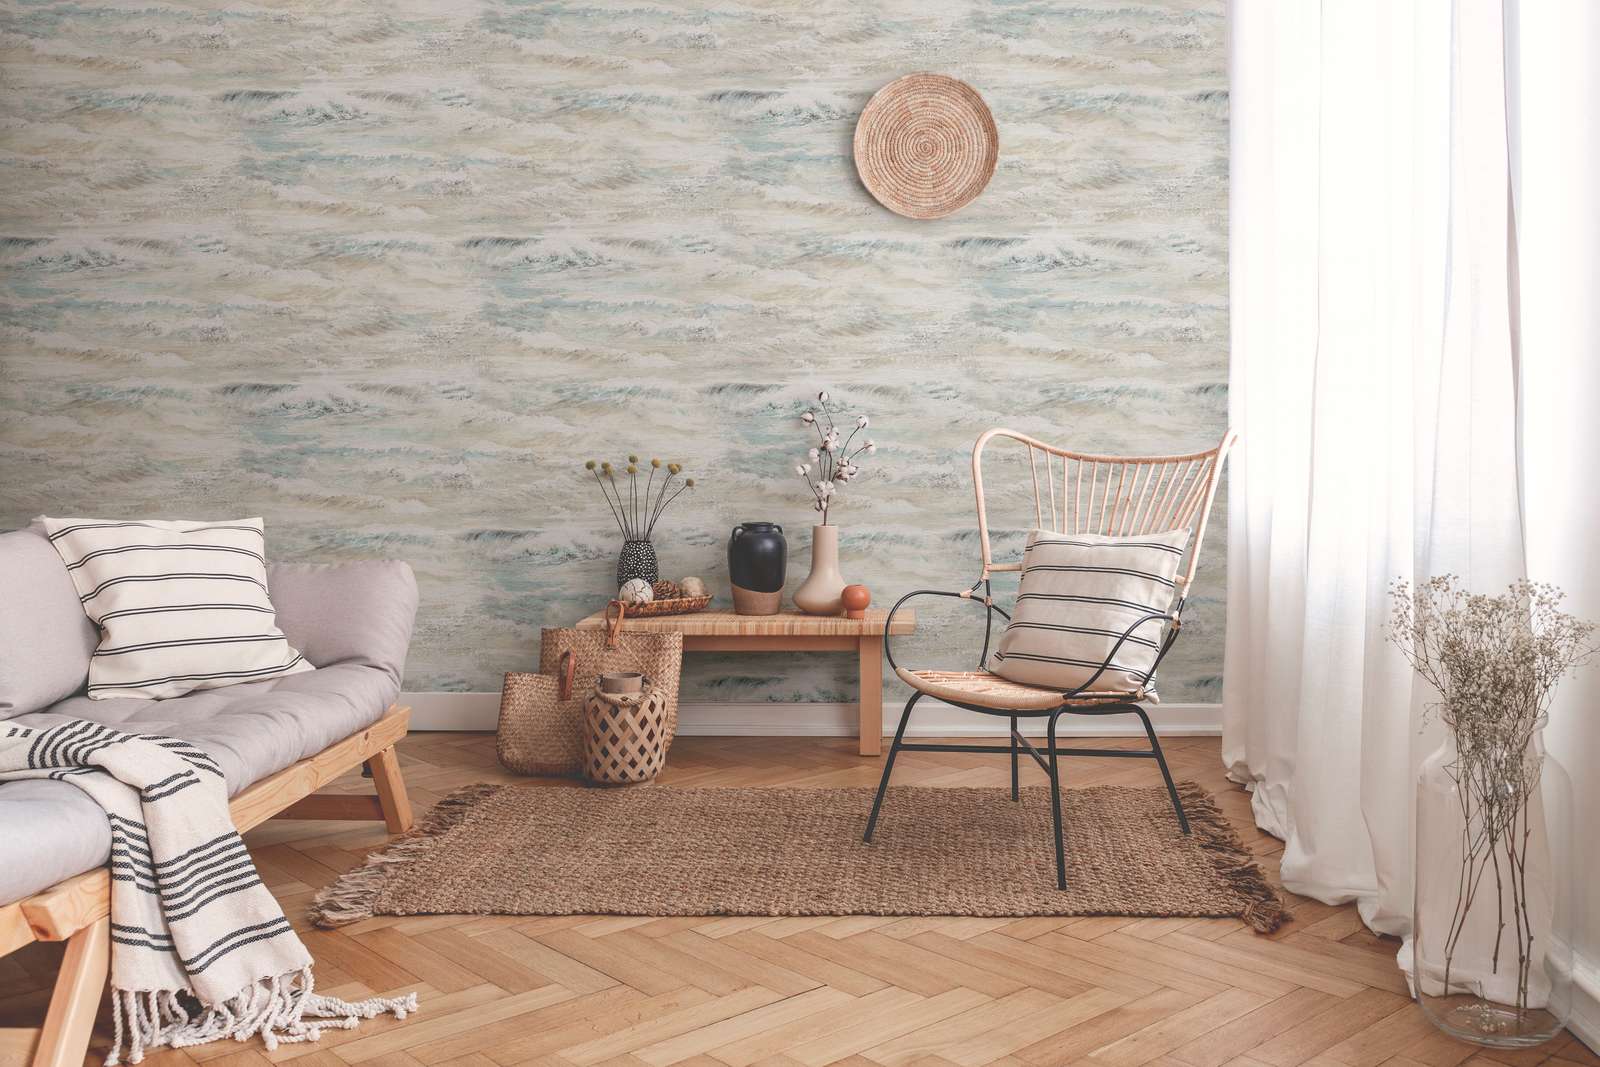             Wallpaper wave motif with glossy effect - beige, blue, green
        